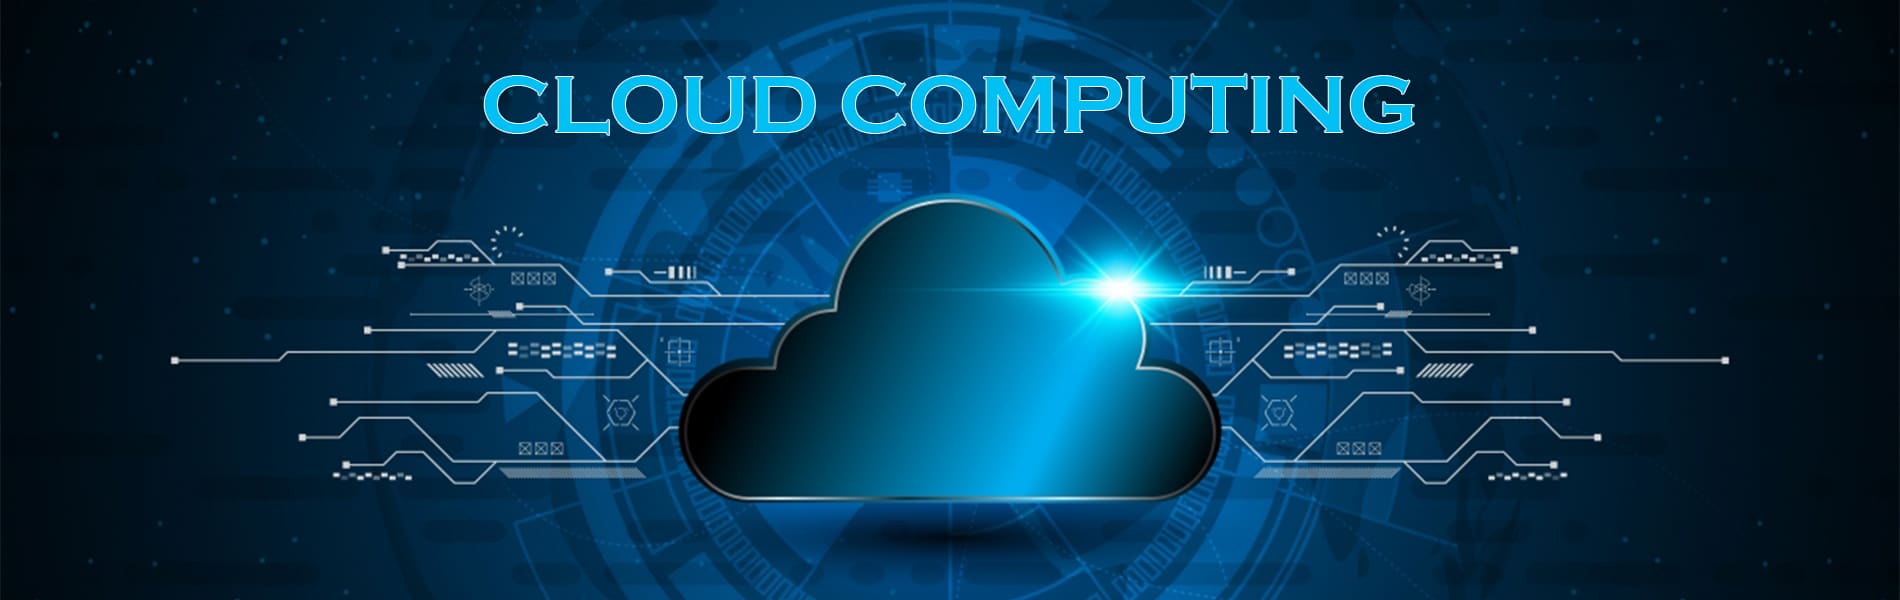 cloud-computing-banner